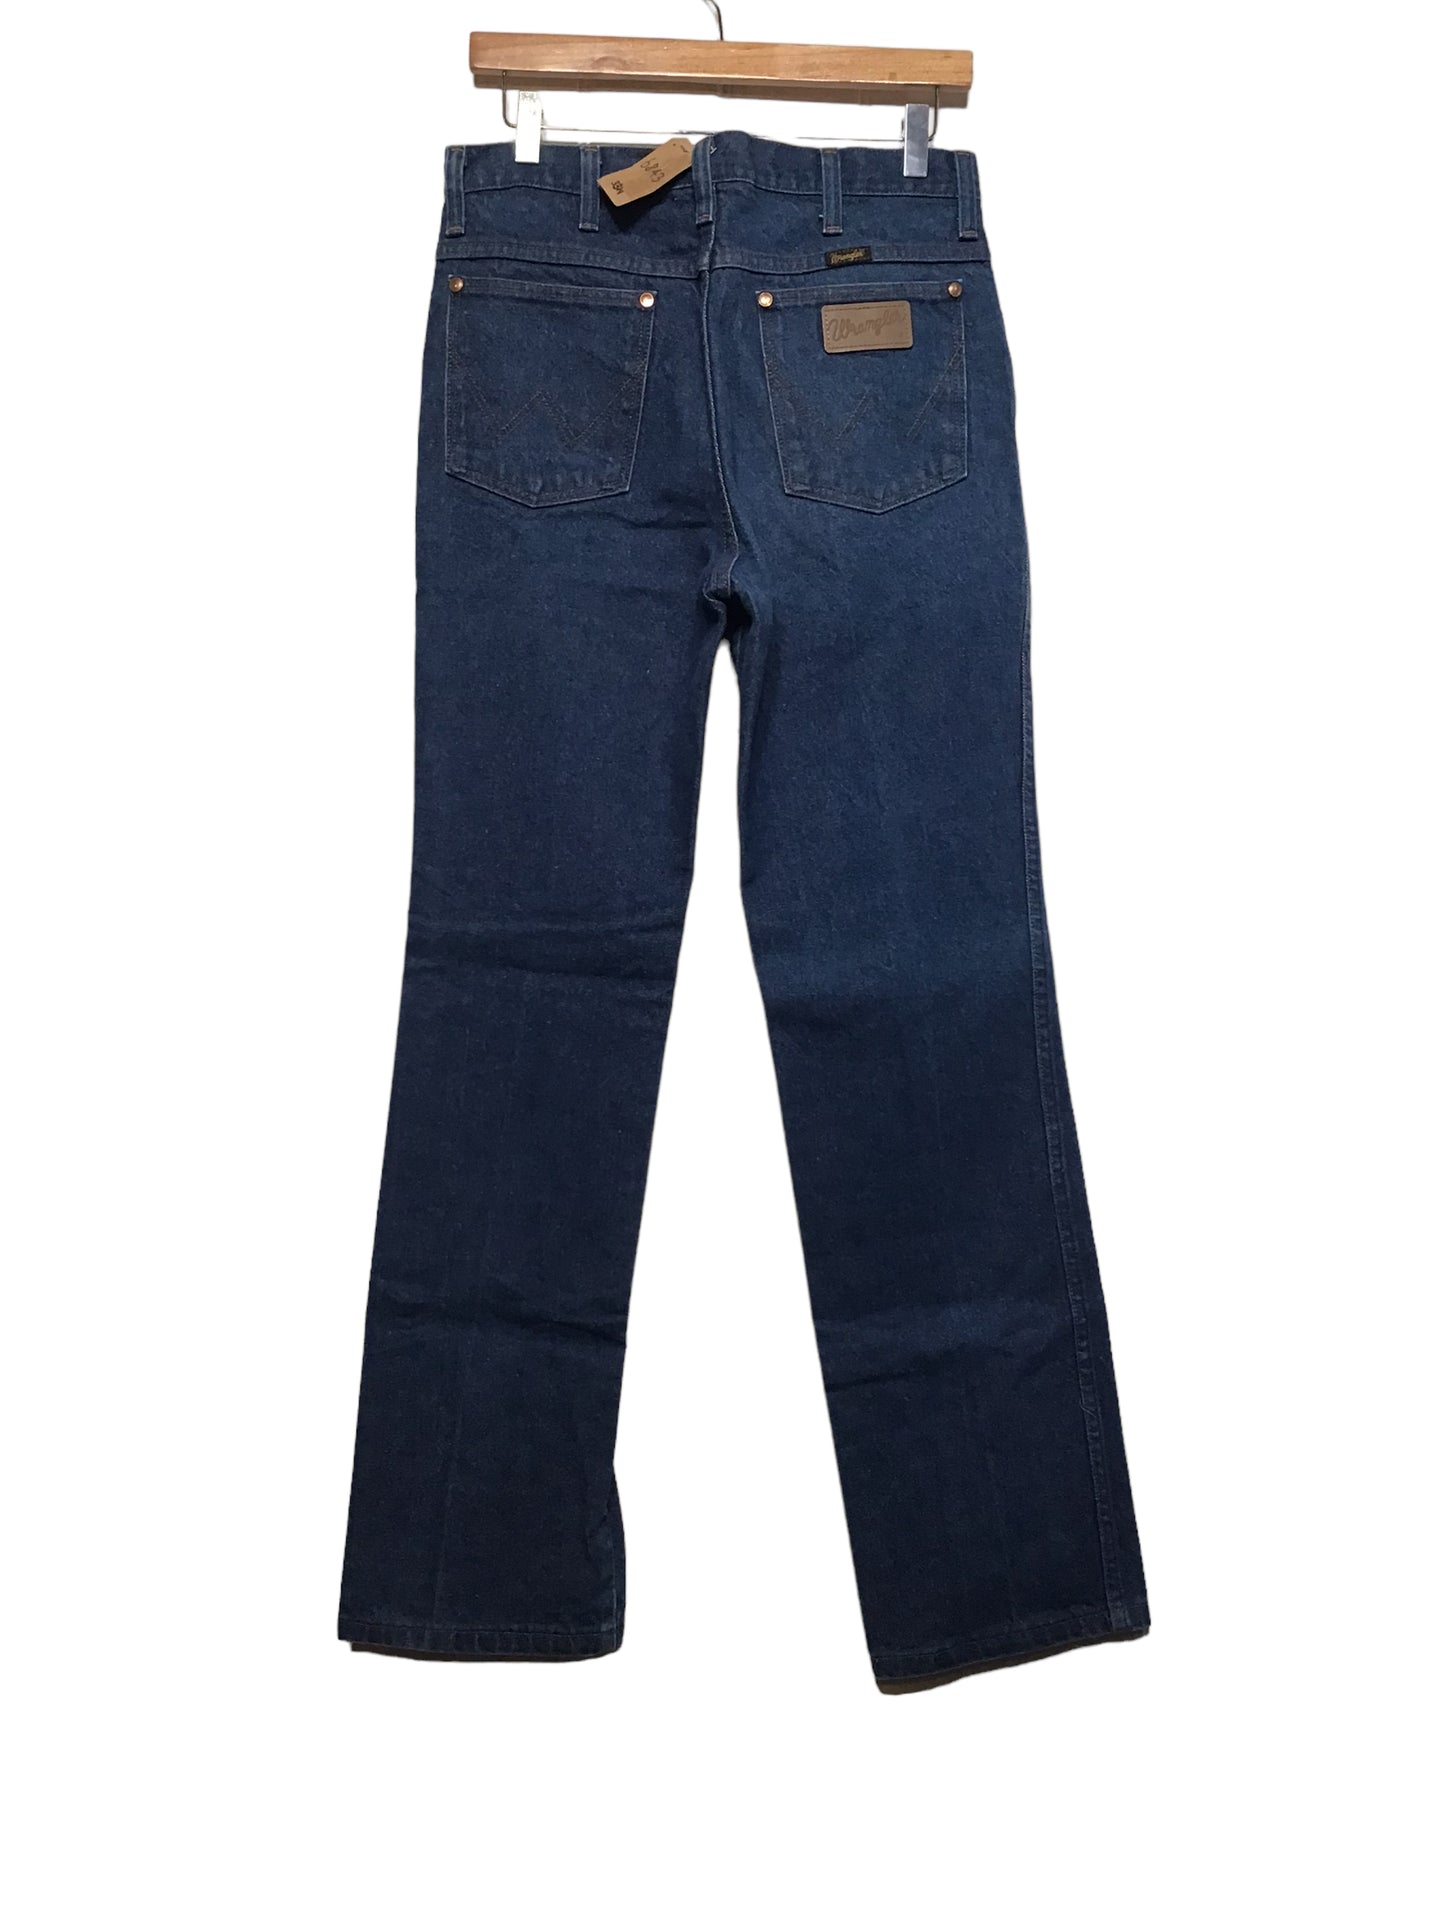 Wrangler Jeans (33x31)